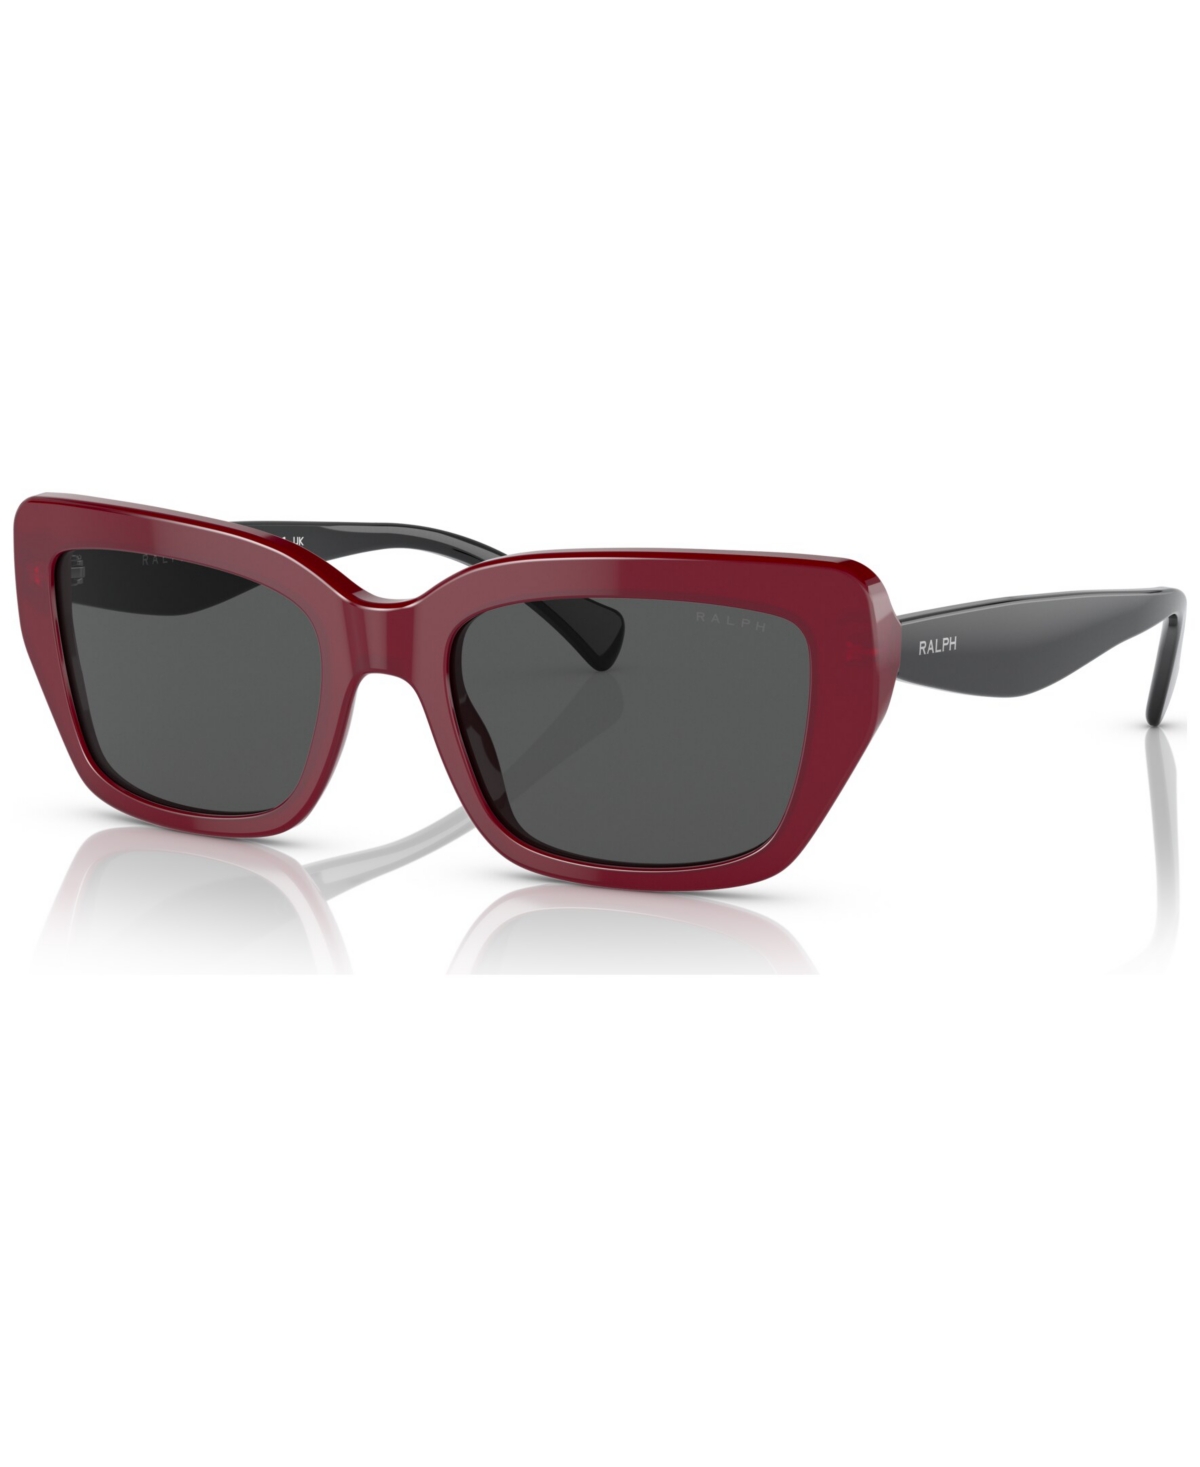 Women's Sunglasses, RA529253-x - Shiny Opal Red